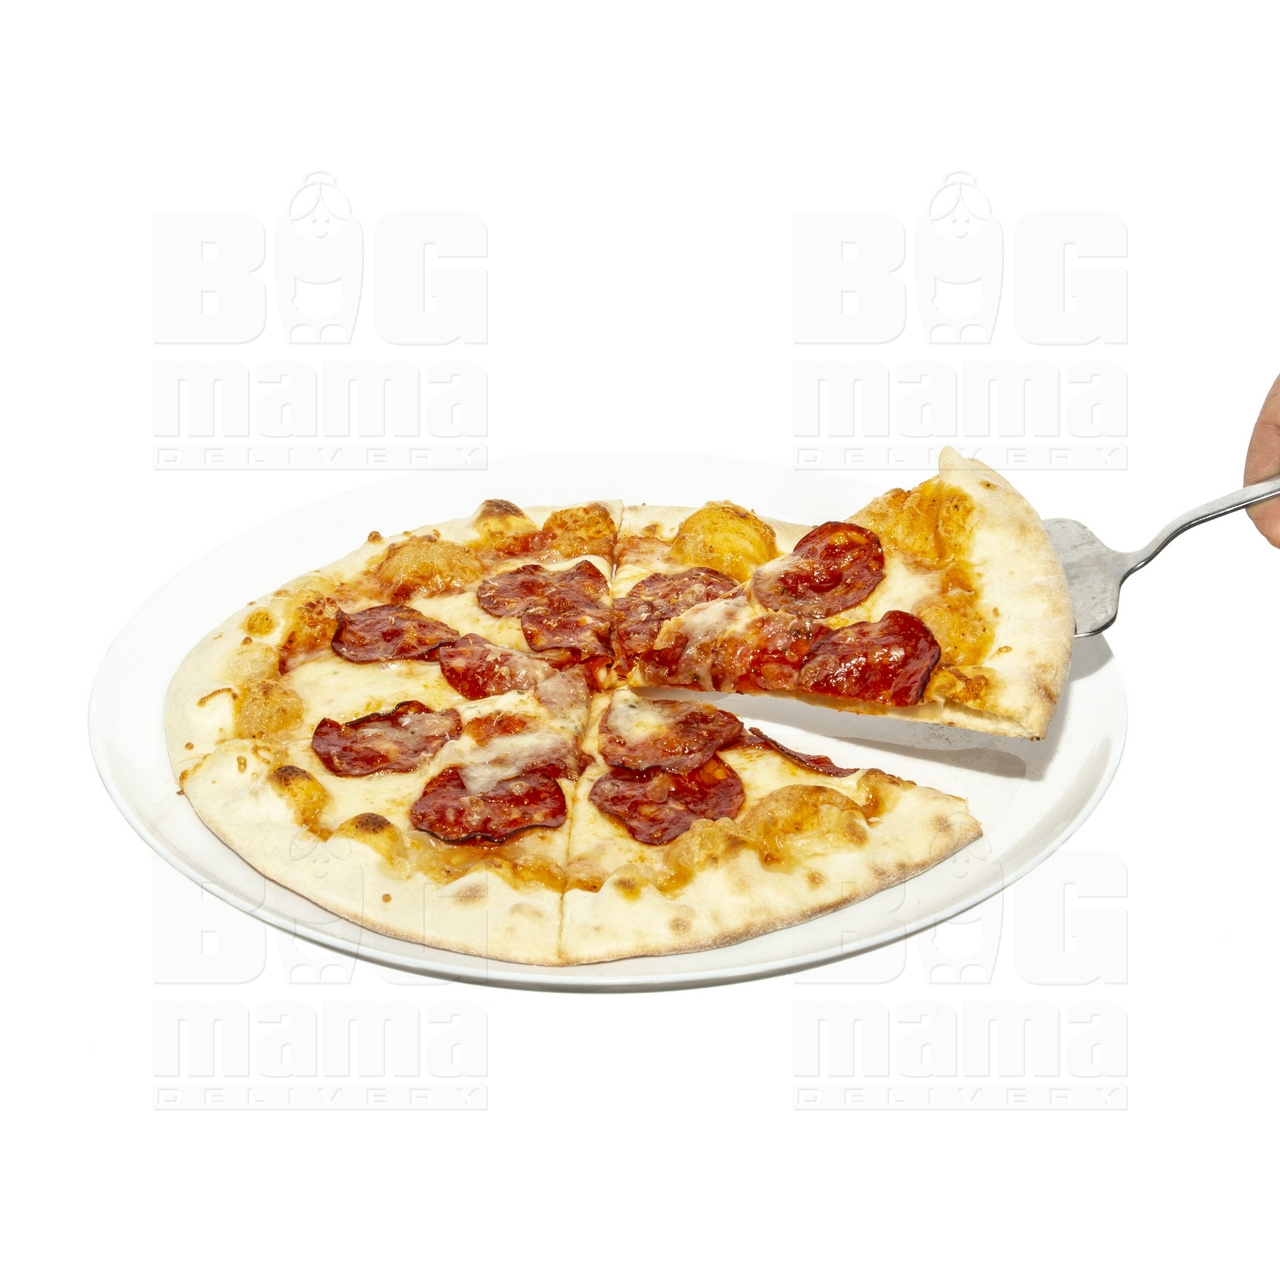 Product #207 image - Diavolo pizza